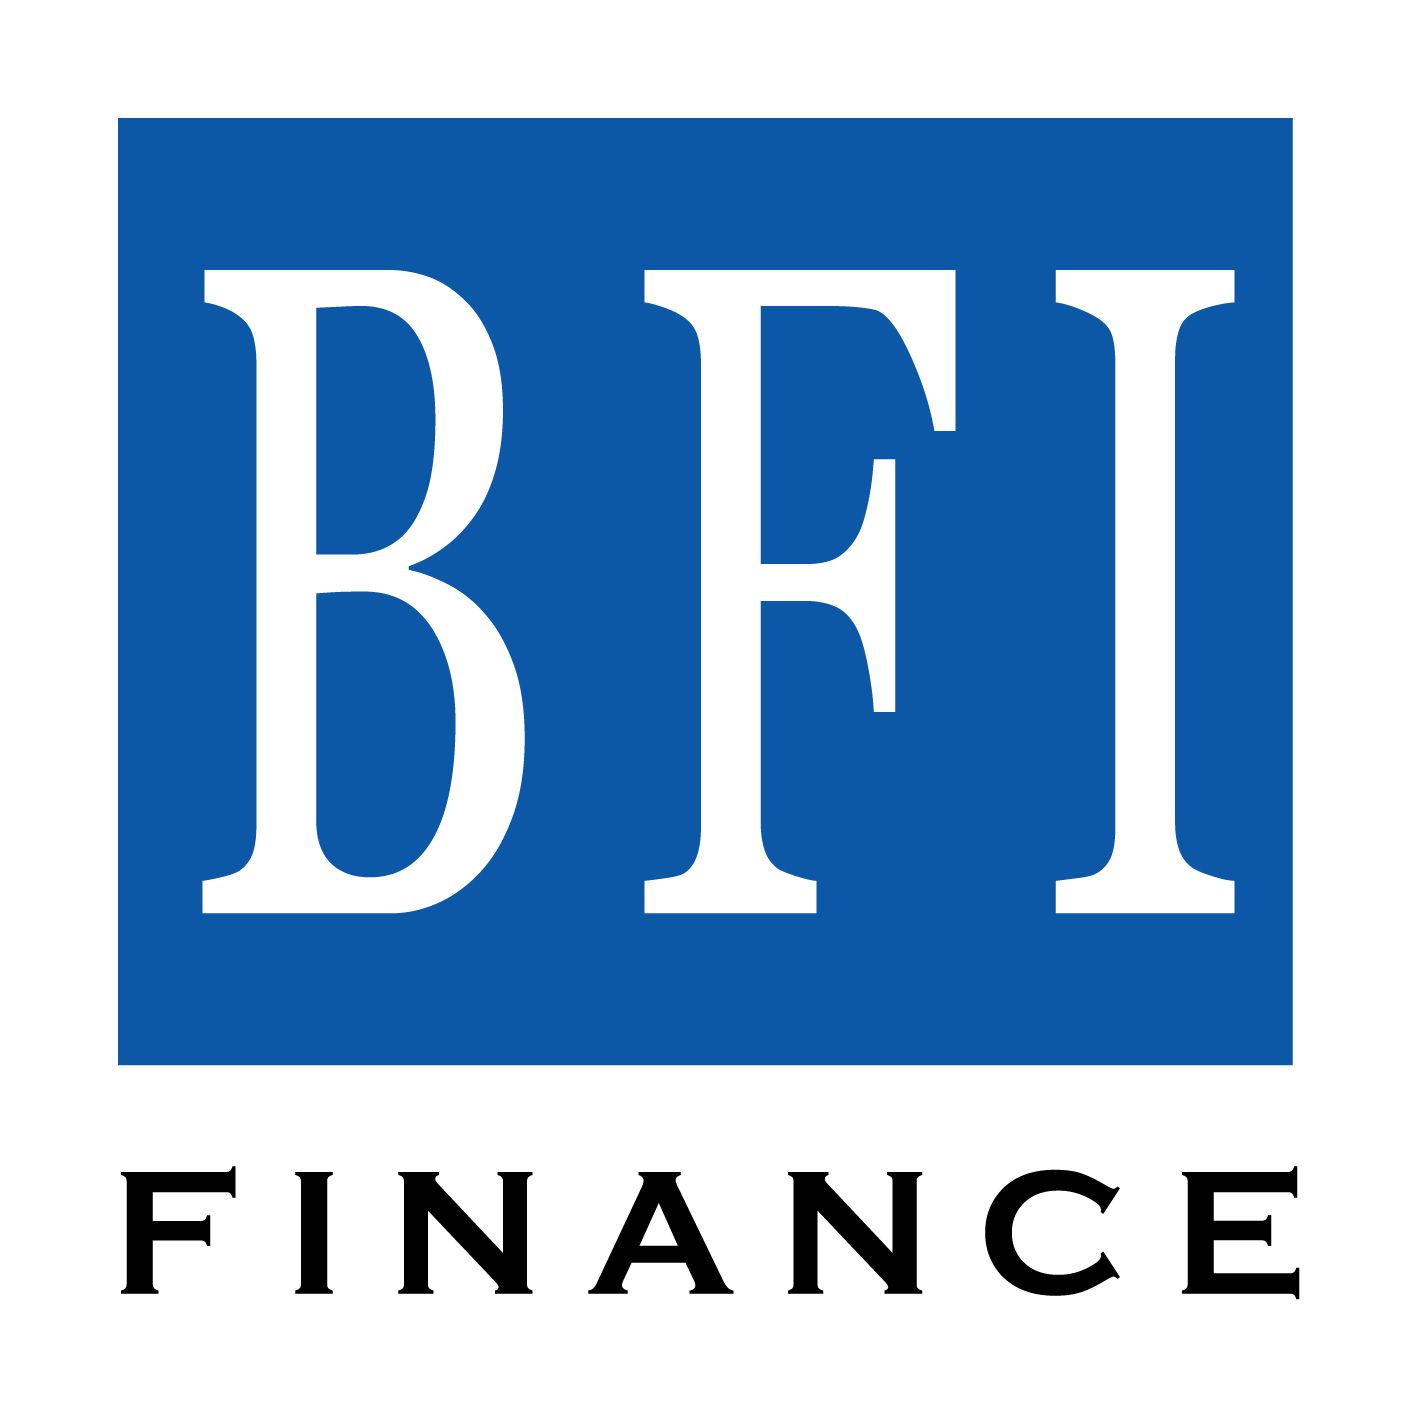 PT BFI Finance Indonesia Tbk logo